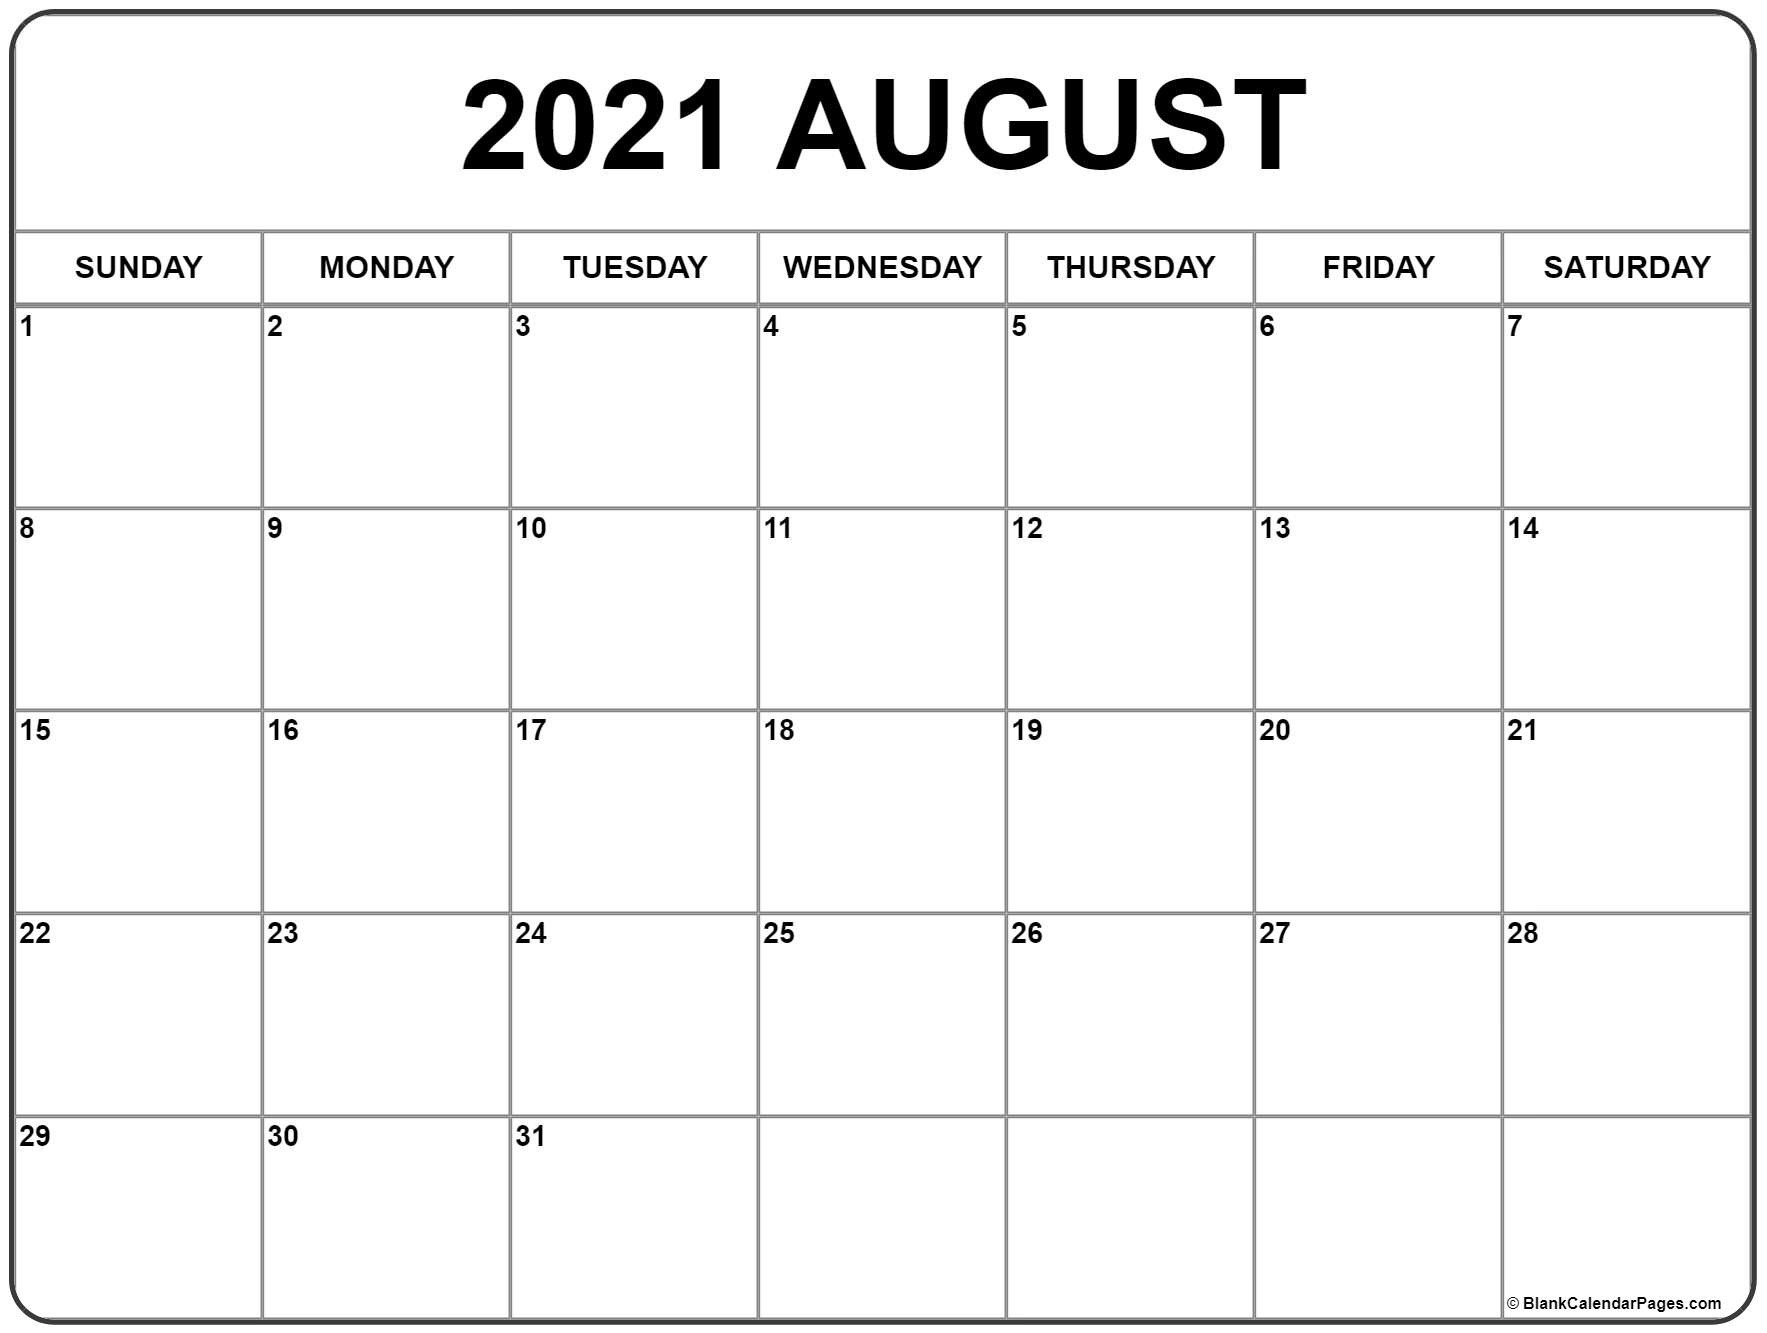 August 2021 Calendar | Free Printable Monthly Calendars-August 2021 Calendar Monday Friday